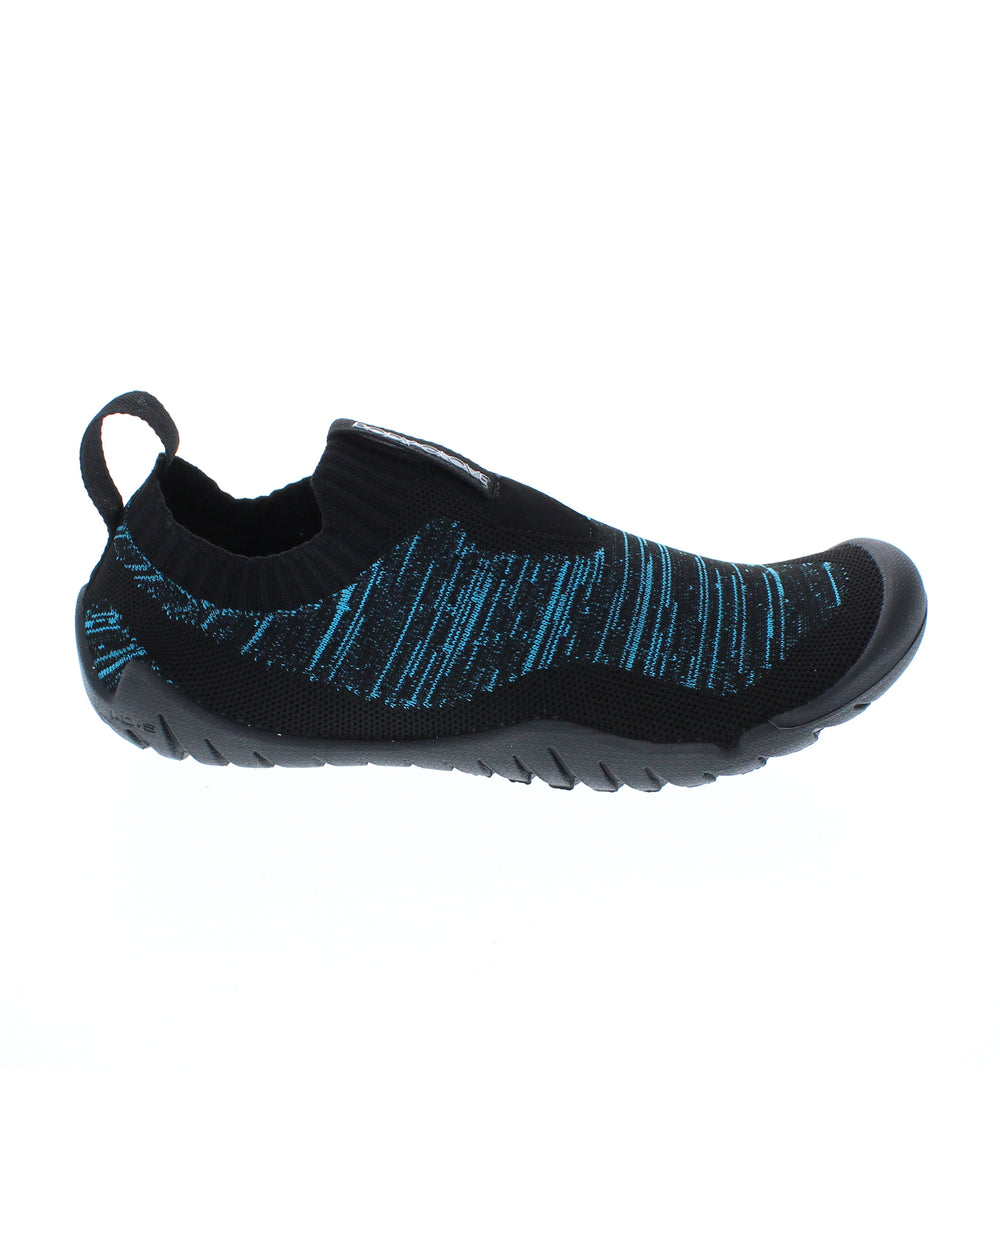 Women's Hydro Knit Siphon Water Shoes - Black/Raspberry - Body Glove